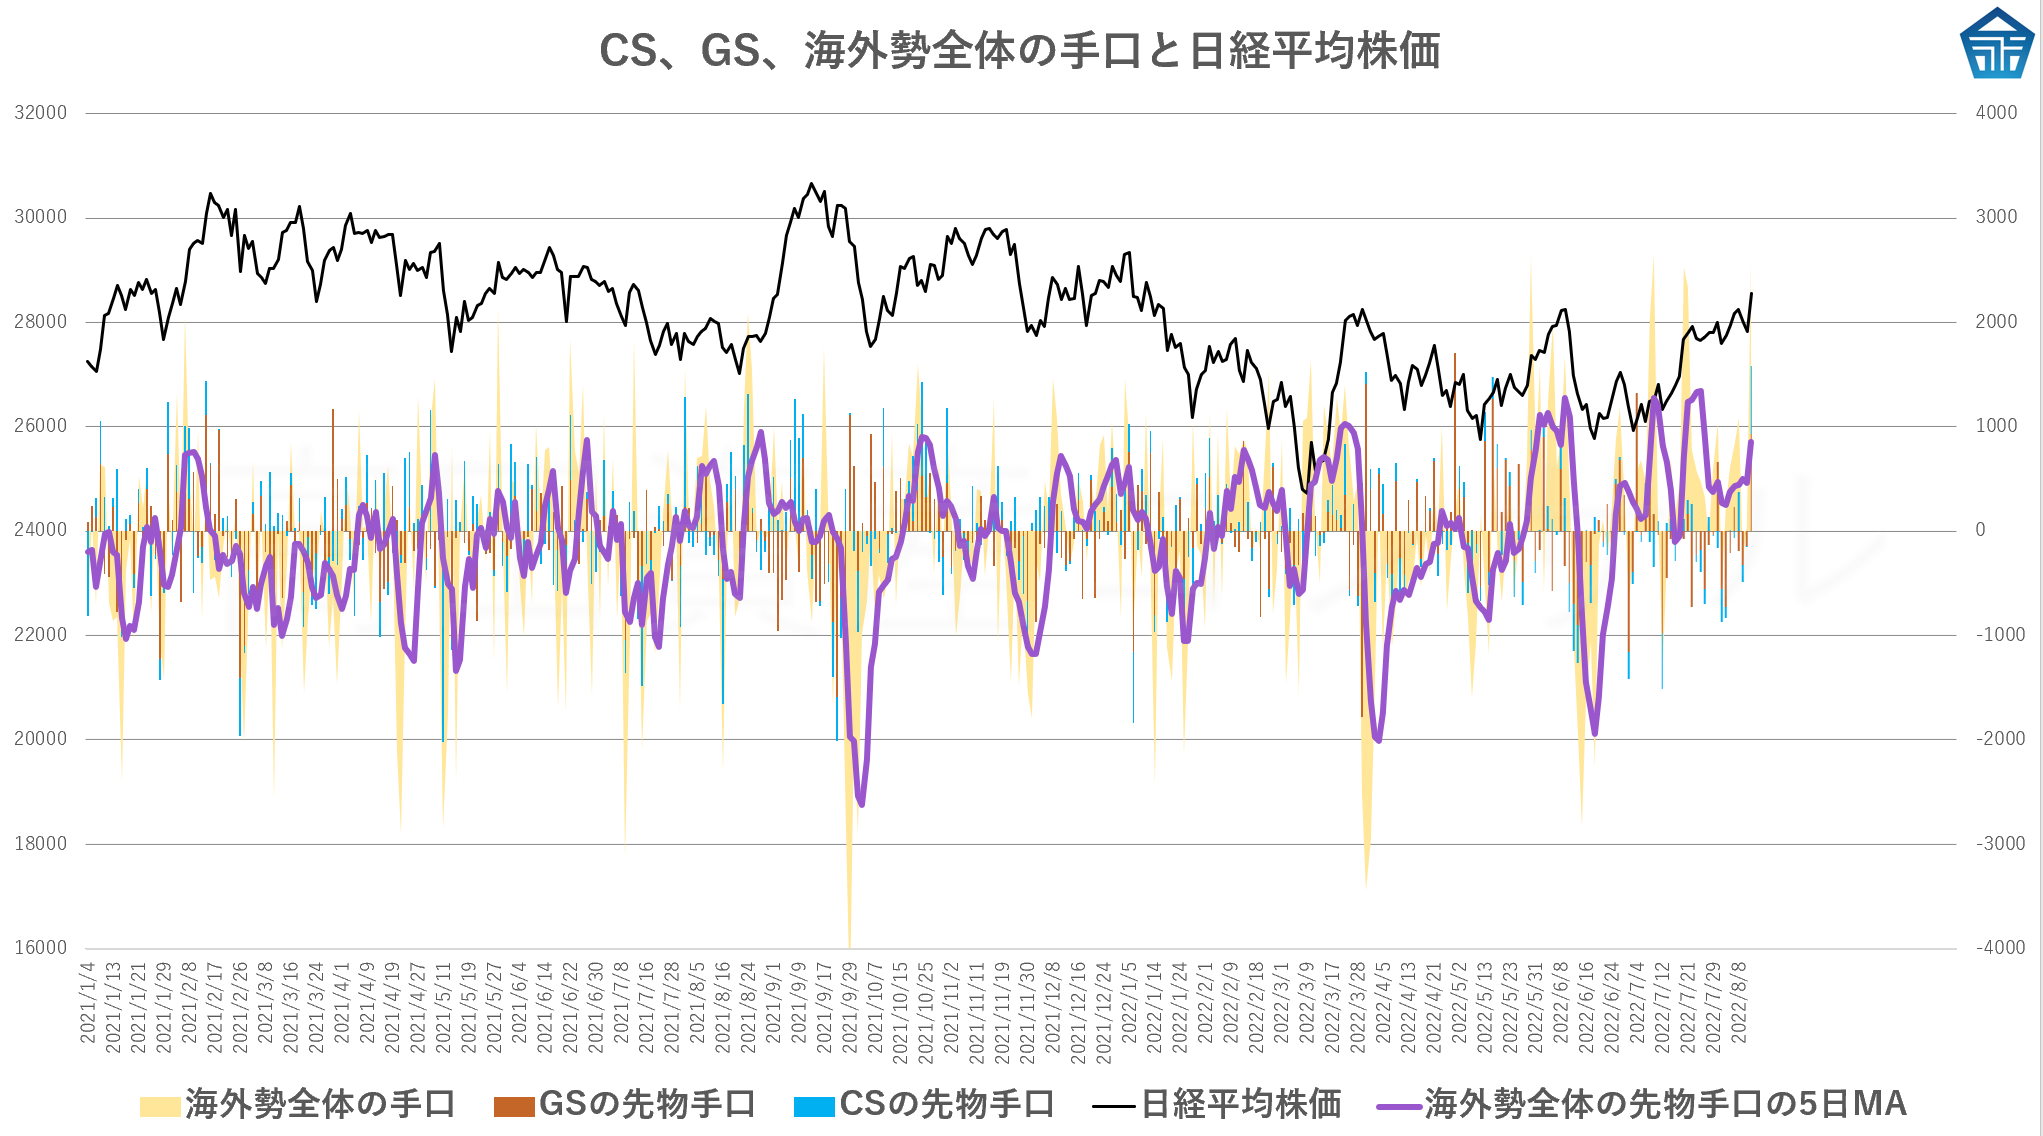 CS、GS、海外勢全体の手口と日経平均株価20220812